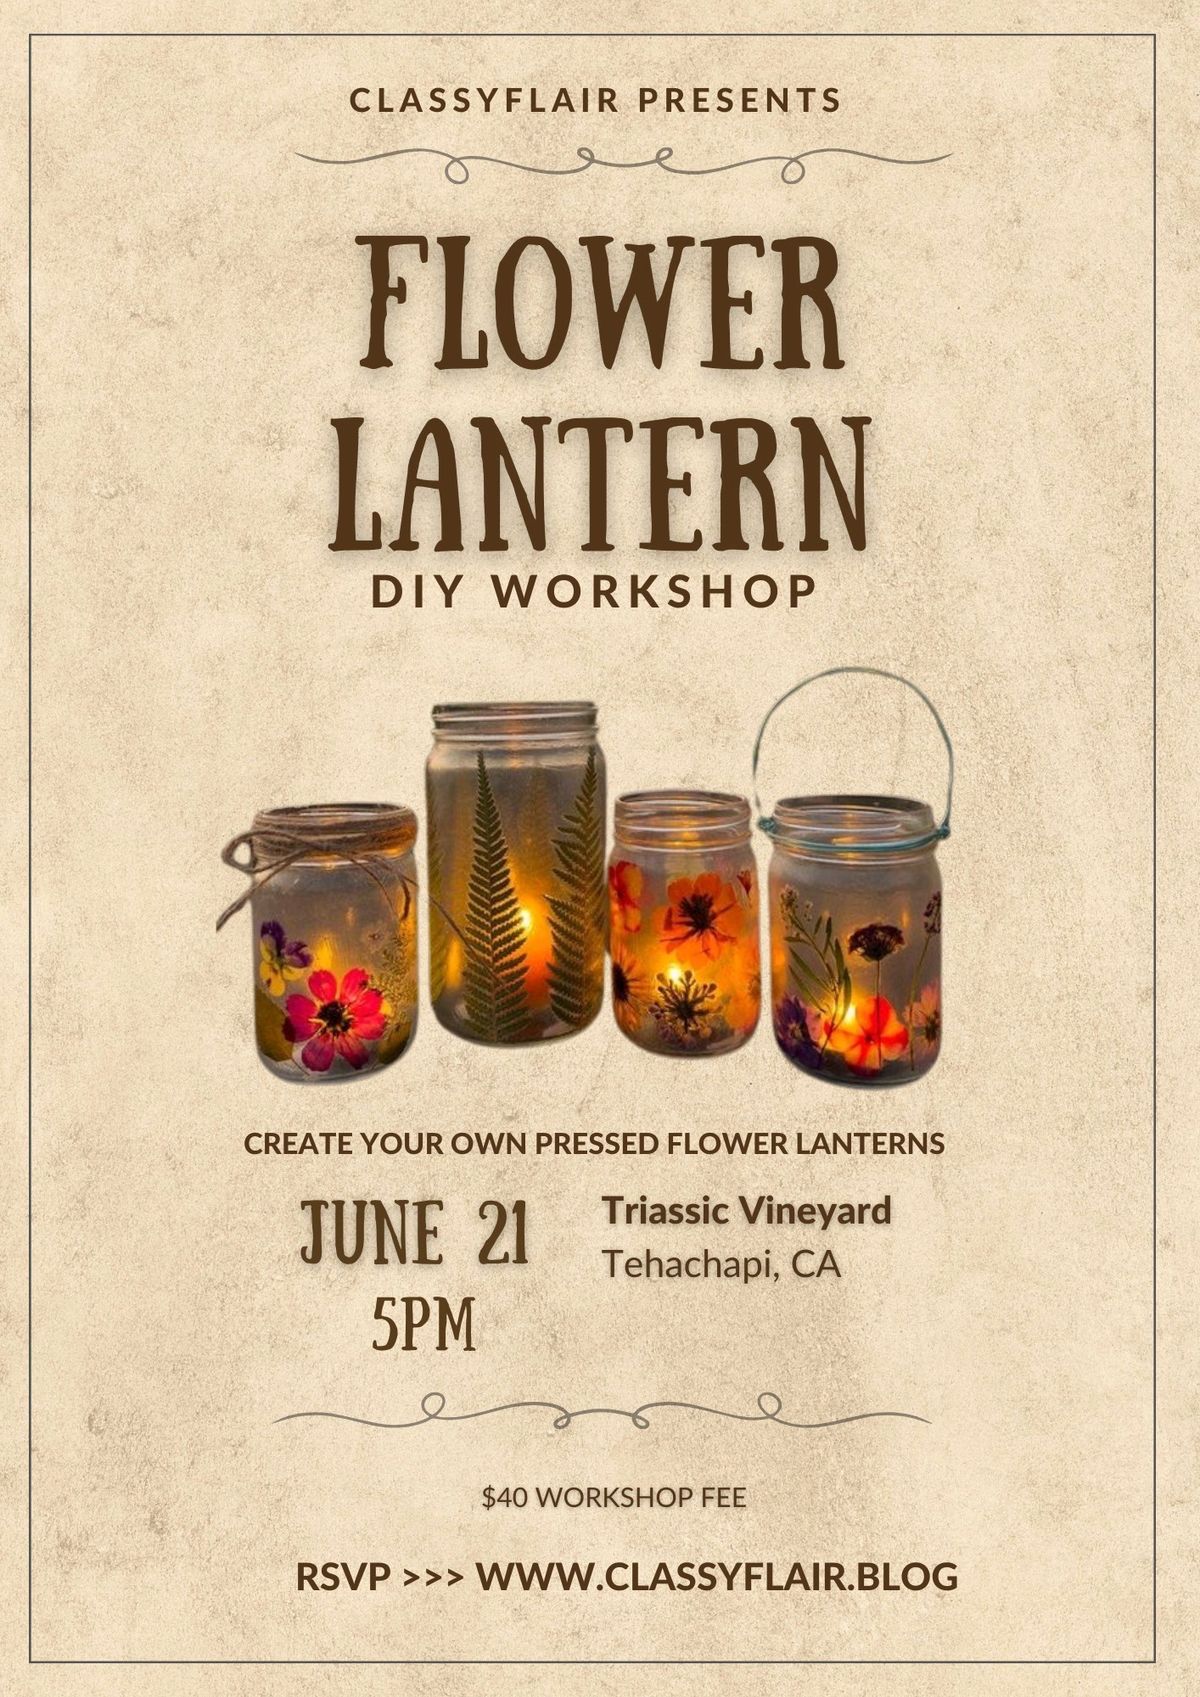 Classy Flair Flower Lantern Workshop